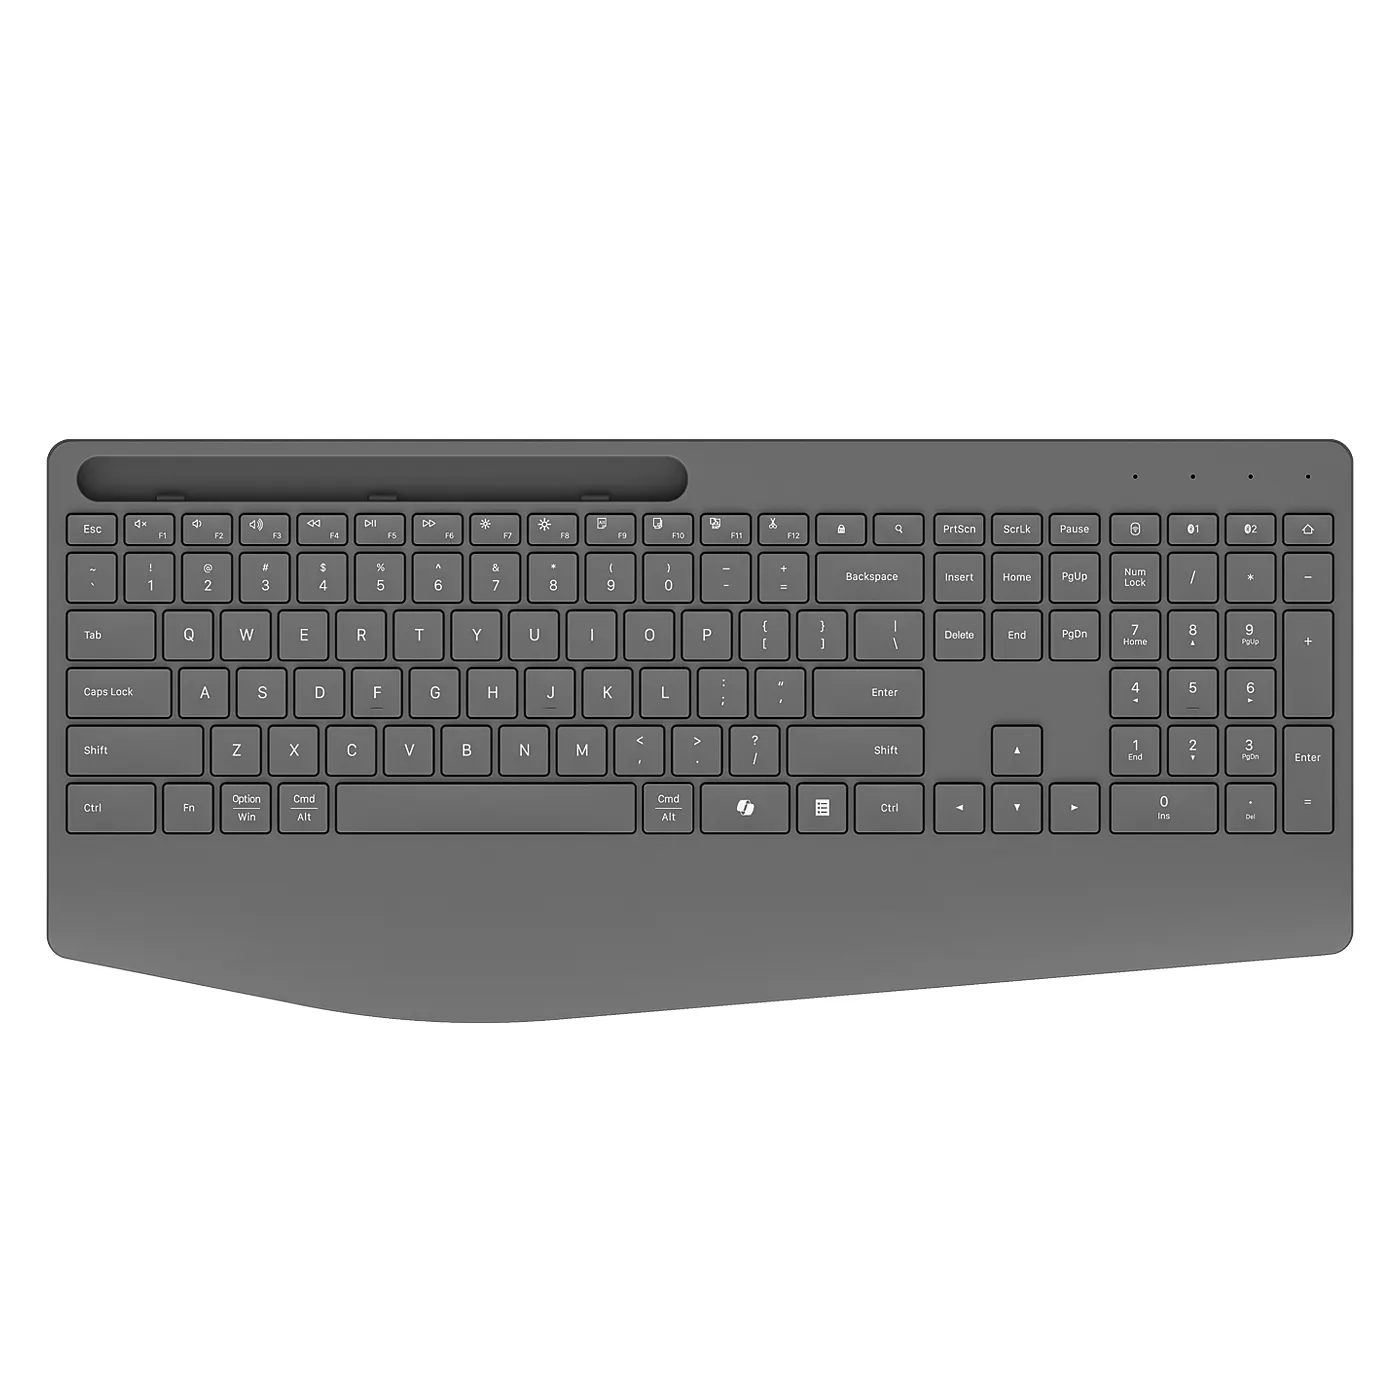 COUSO AI Copilot Key Keyboard with Phone Holder Full Size 111 Keys Scissor Silent Ergonomic Wireless Keyboard with Wrist Rest